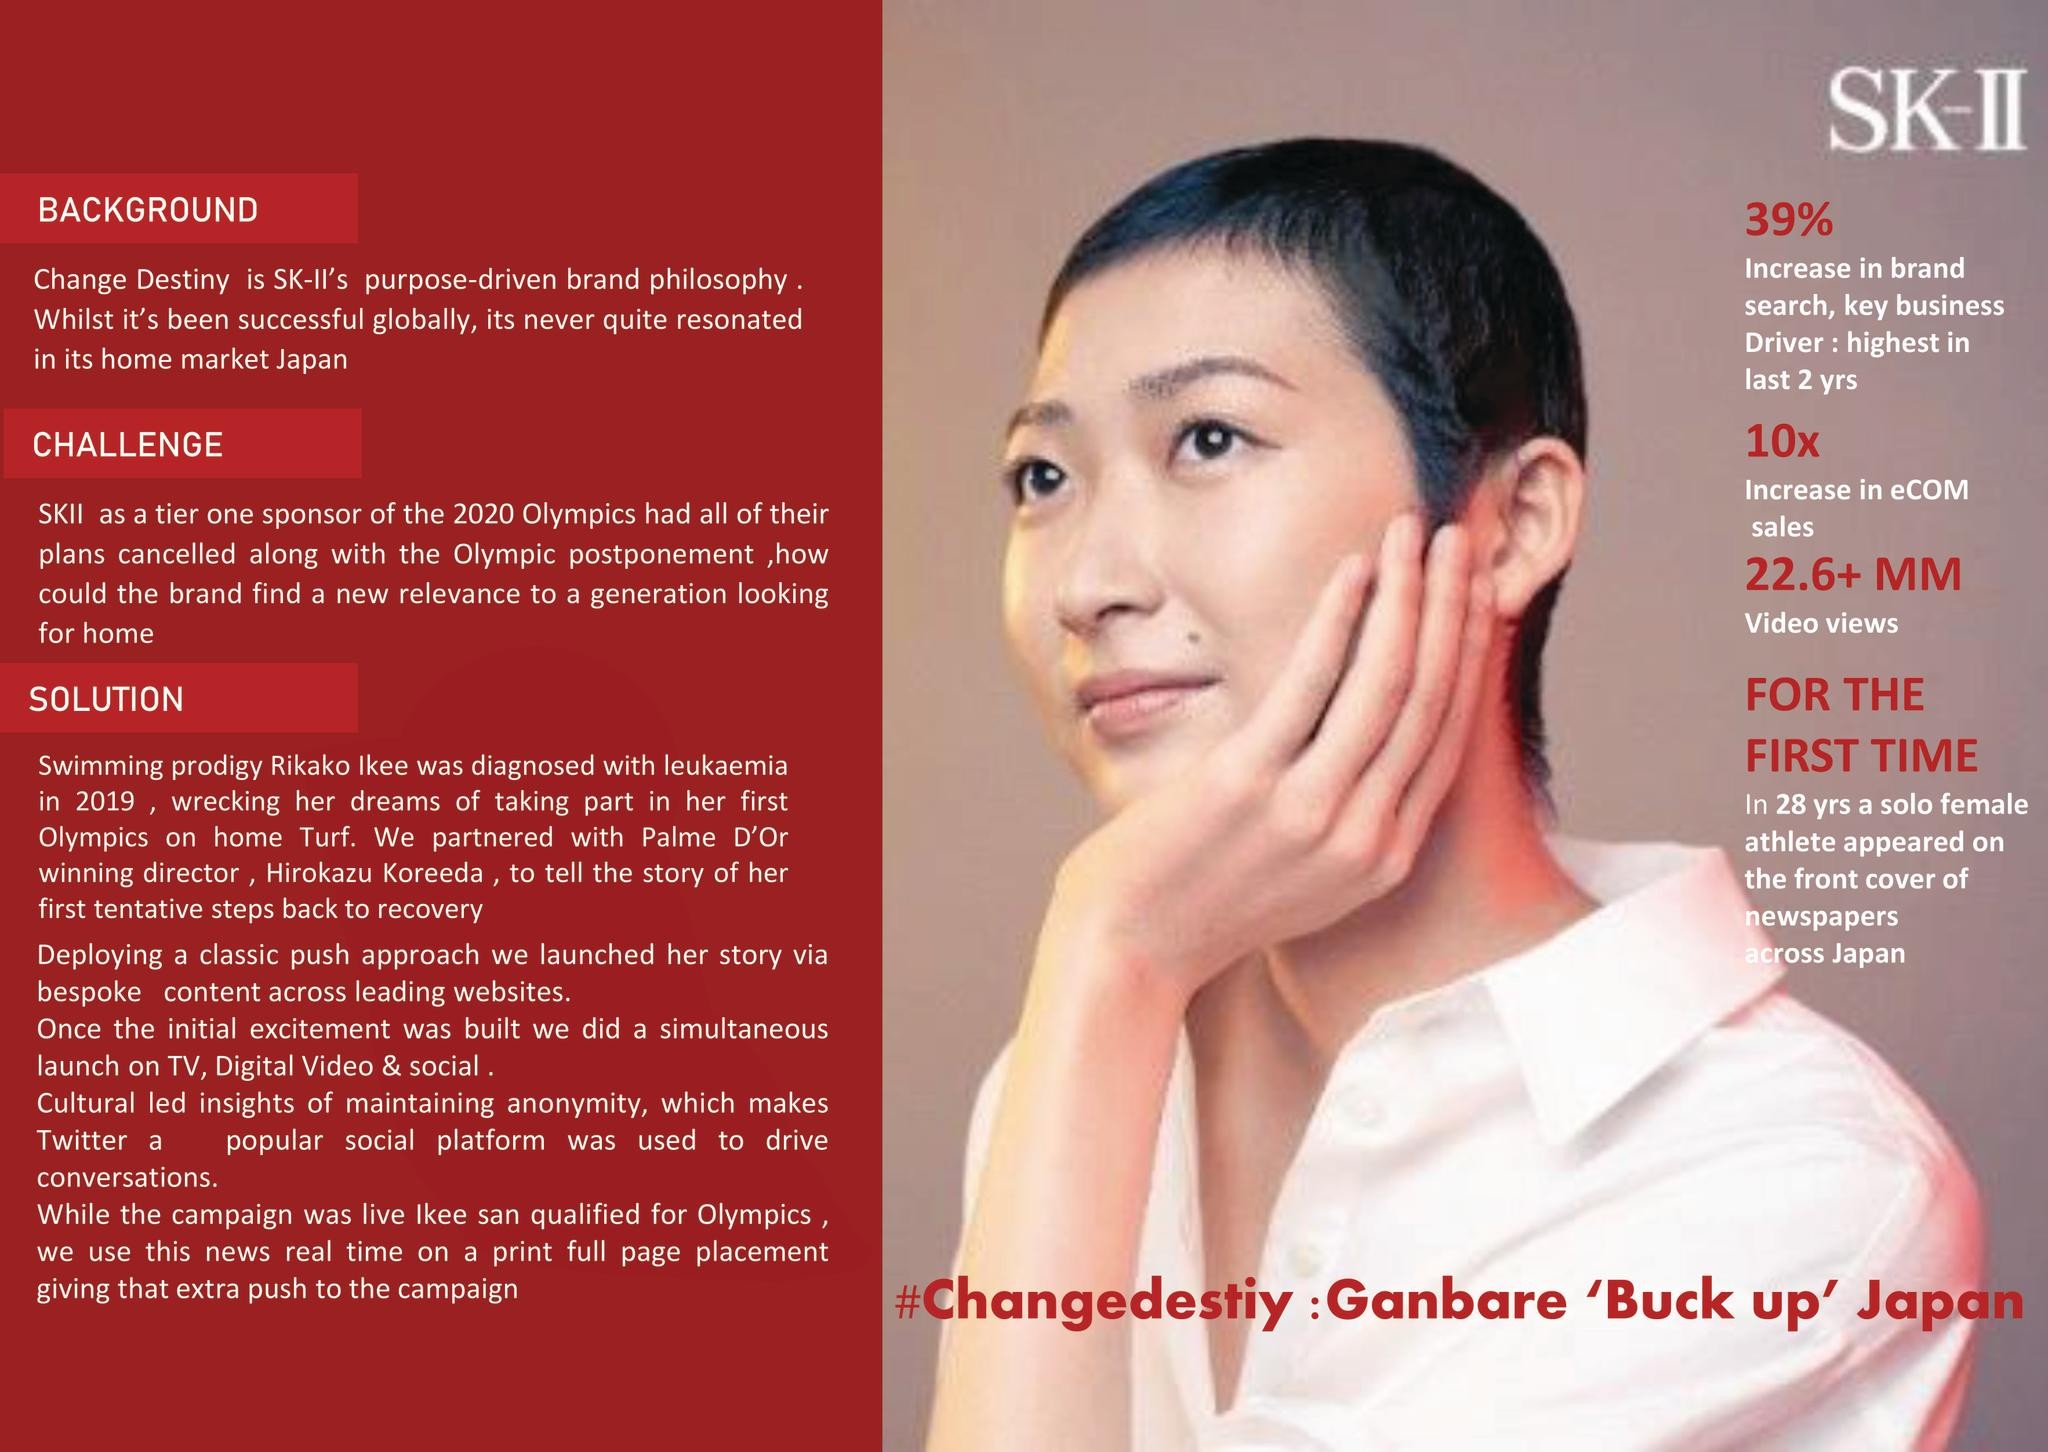 #CHANGEDESTINY : GANBARE 'BUCK UP' JAPAN